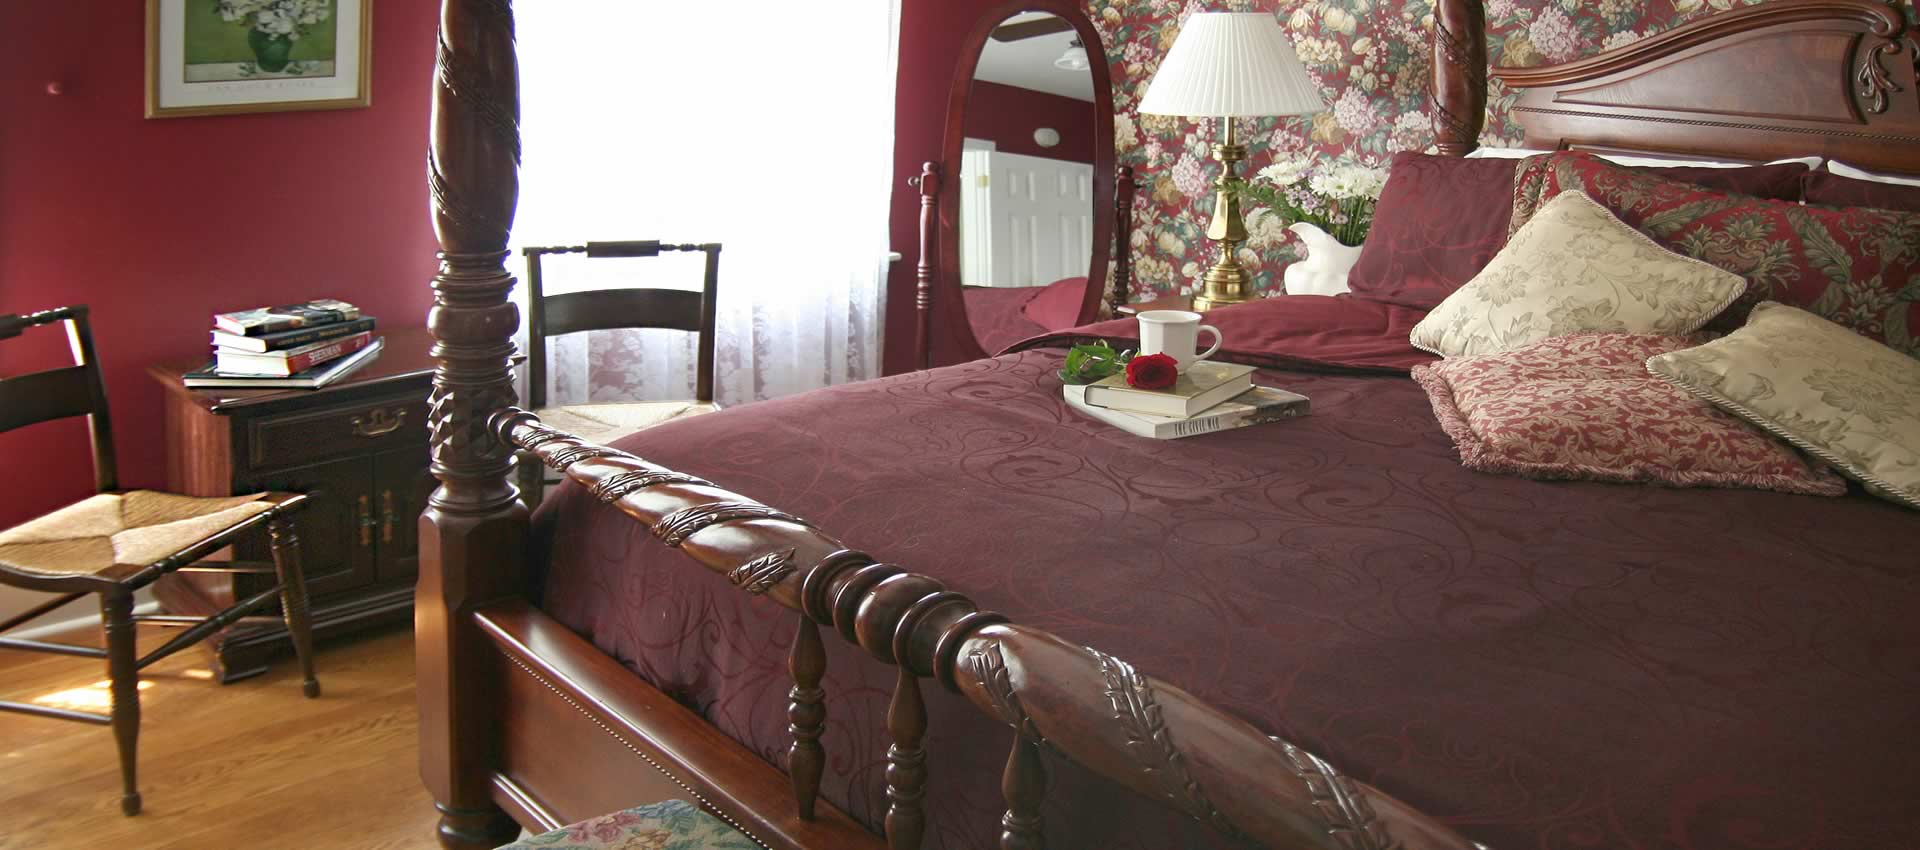 Brafferton Suite bed and dresser